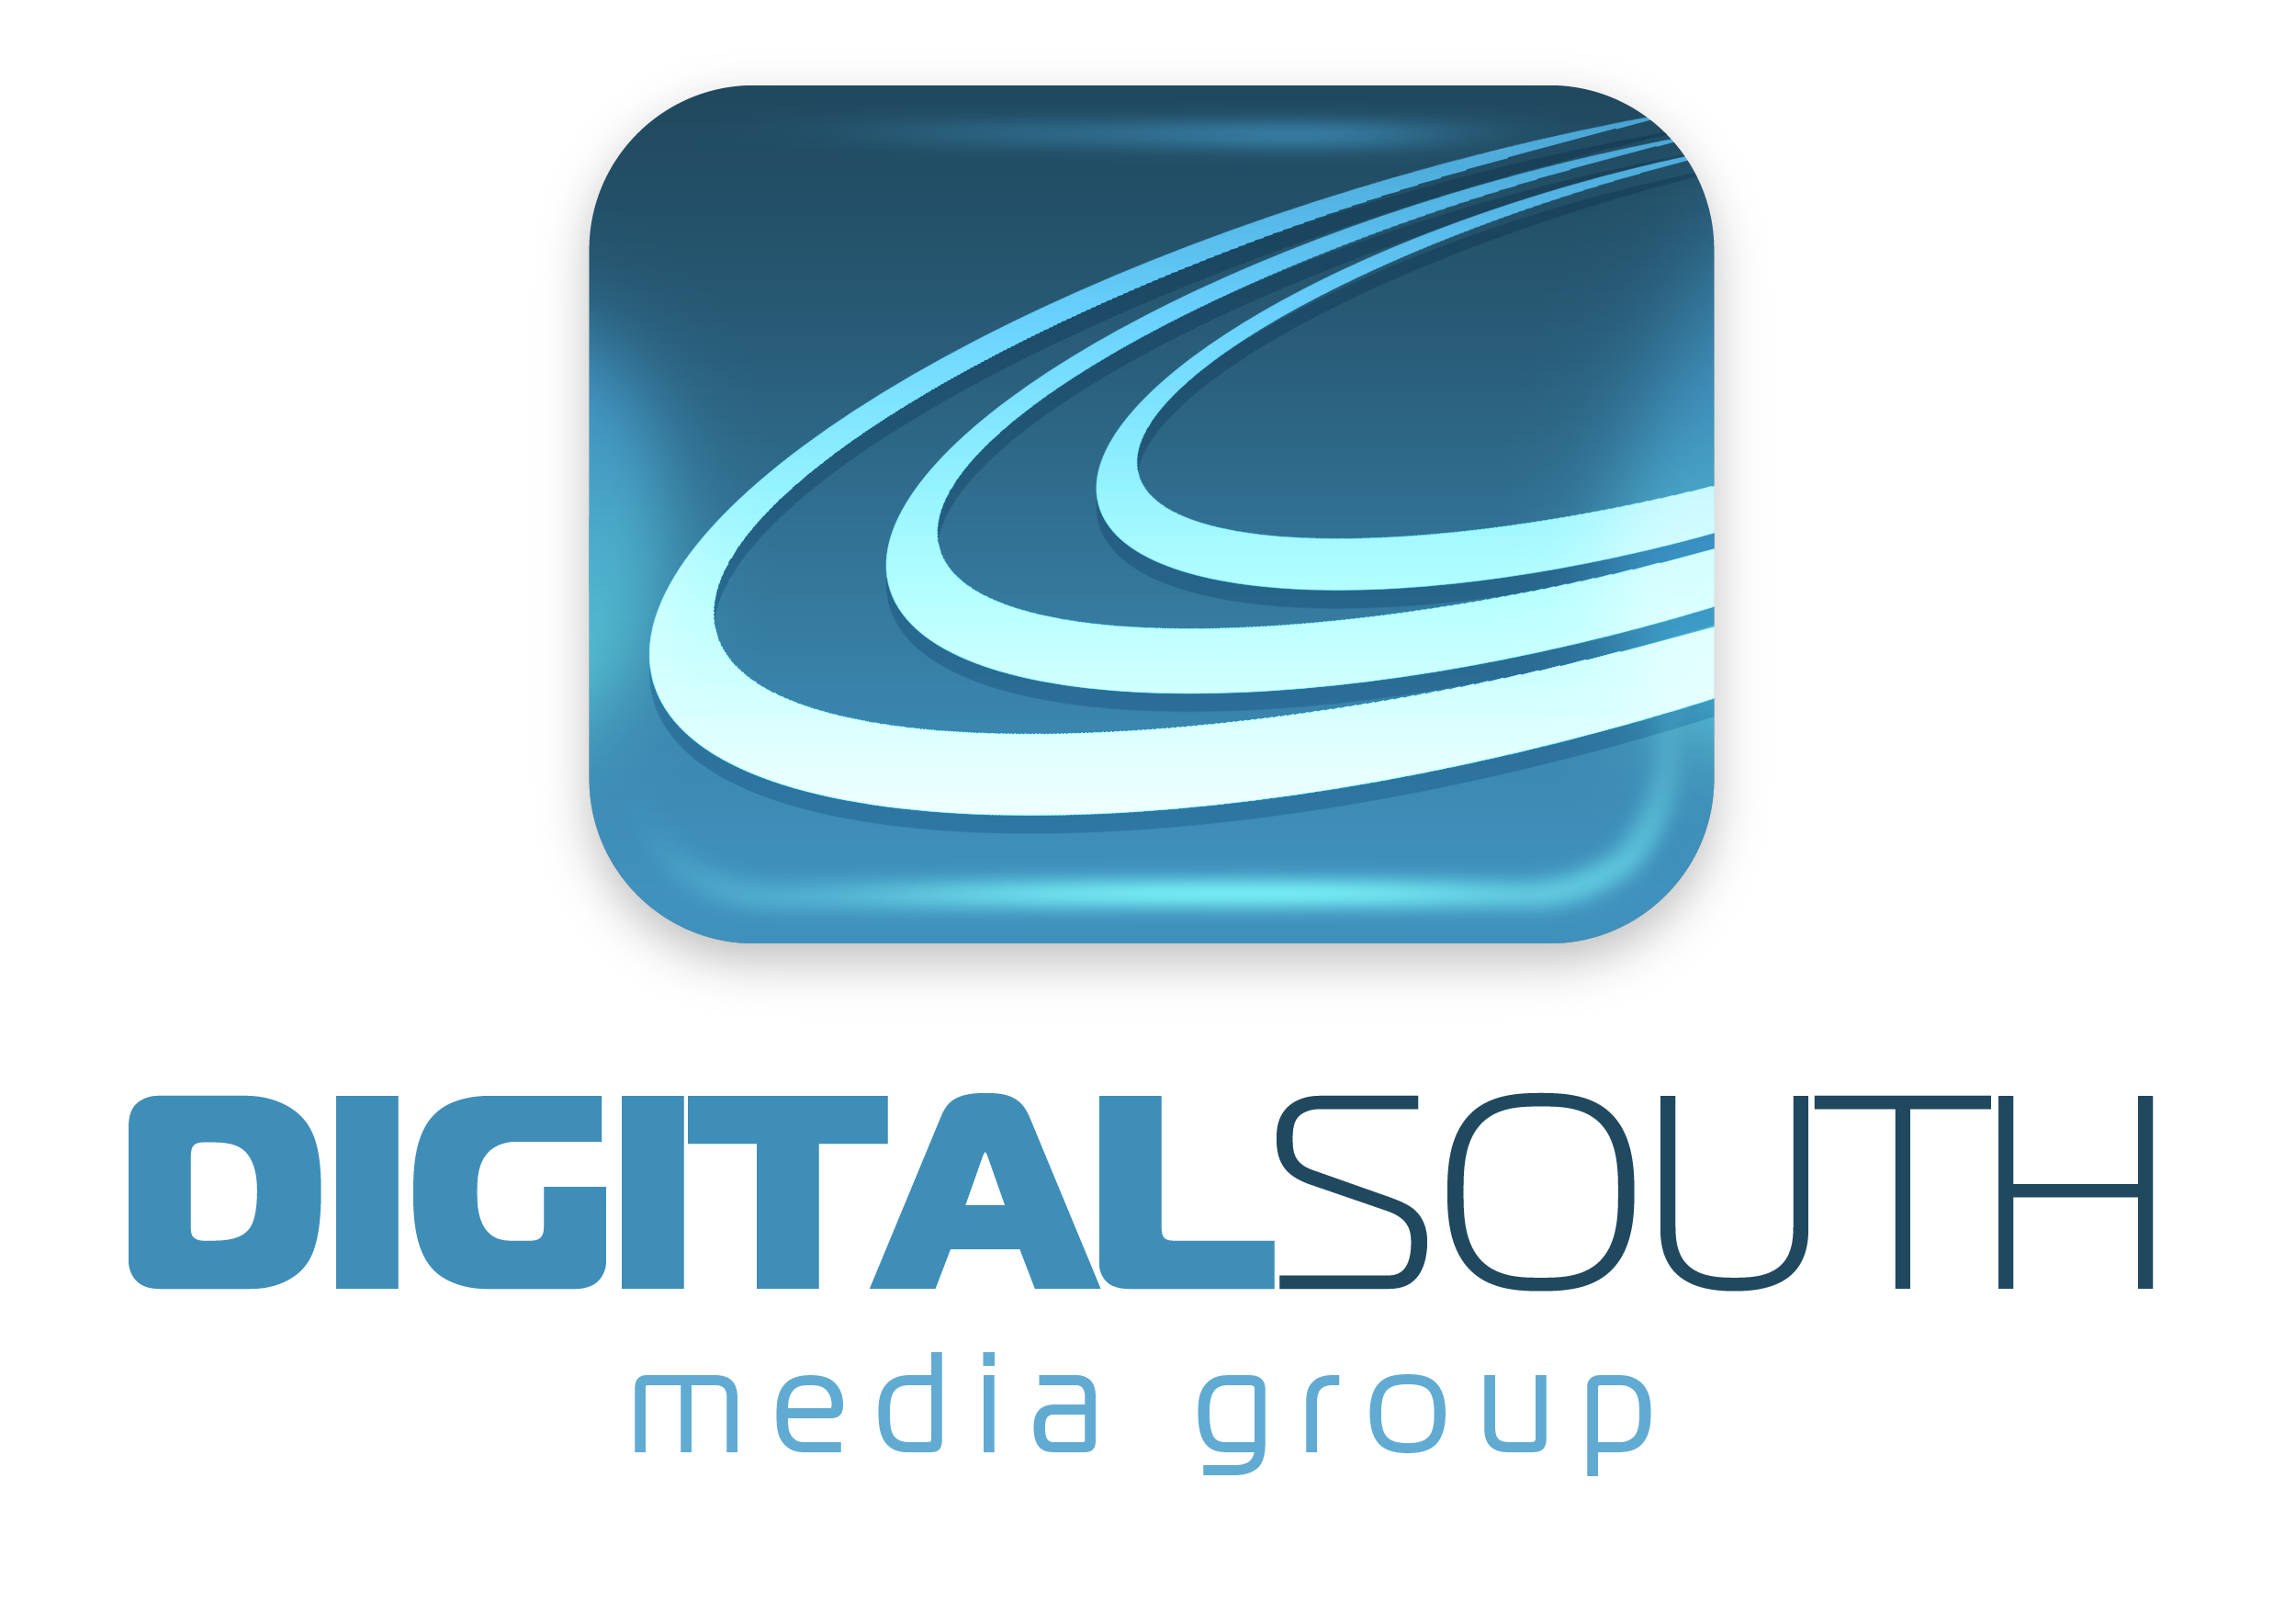 Digital South Media Group